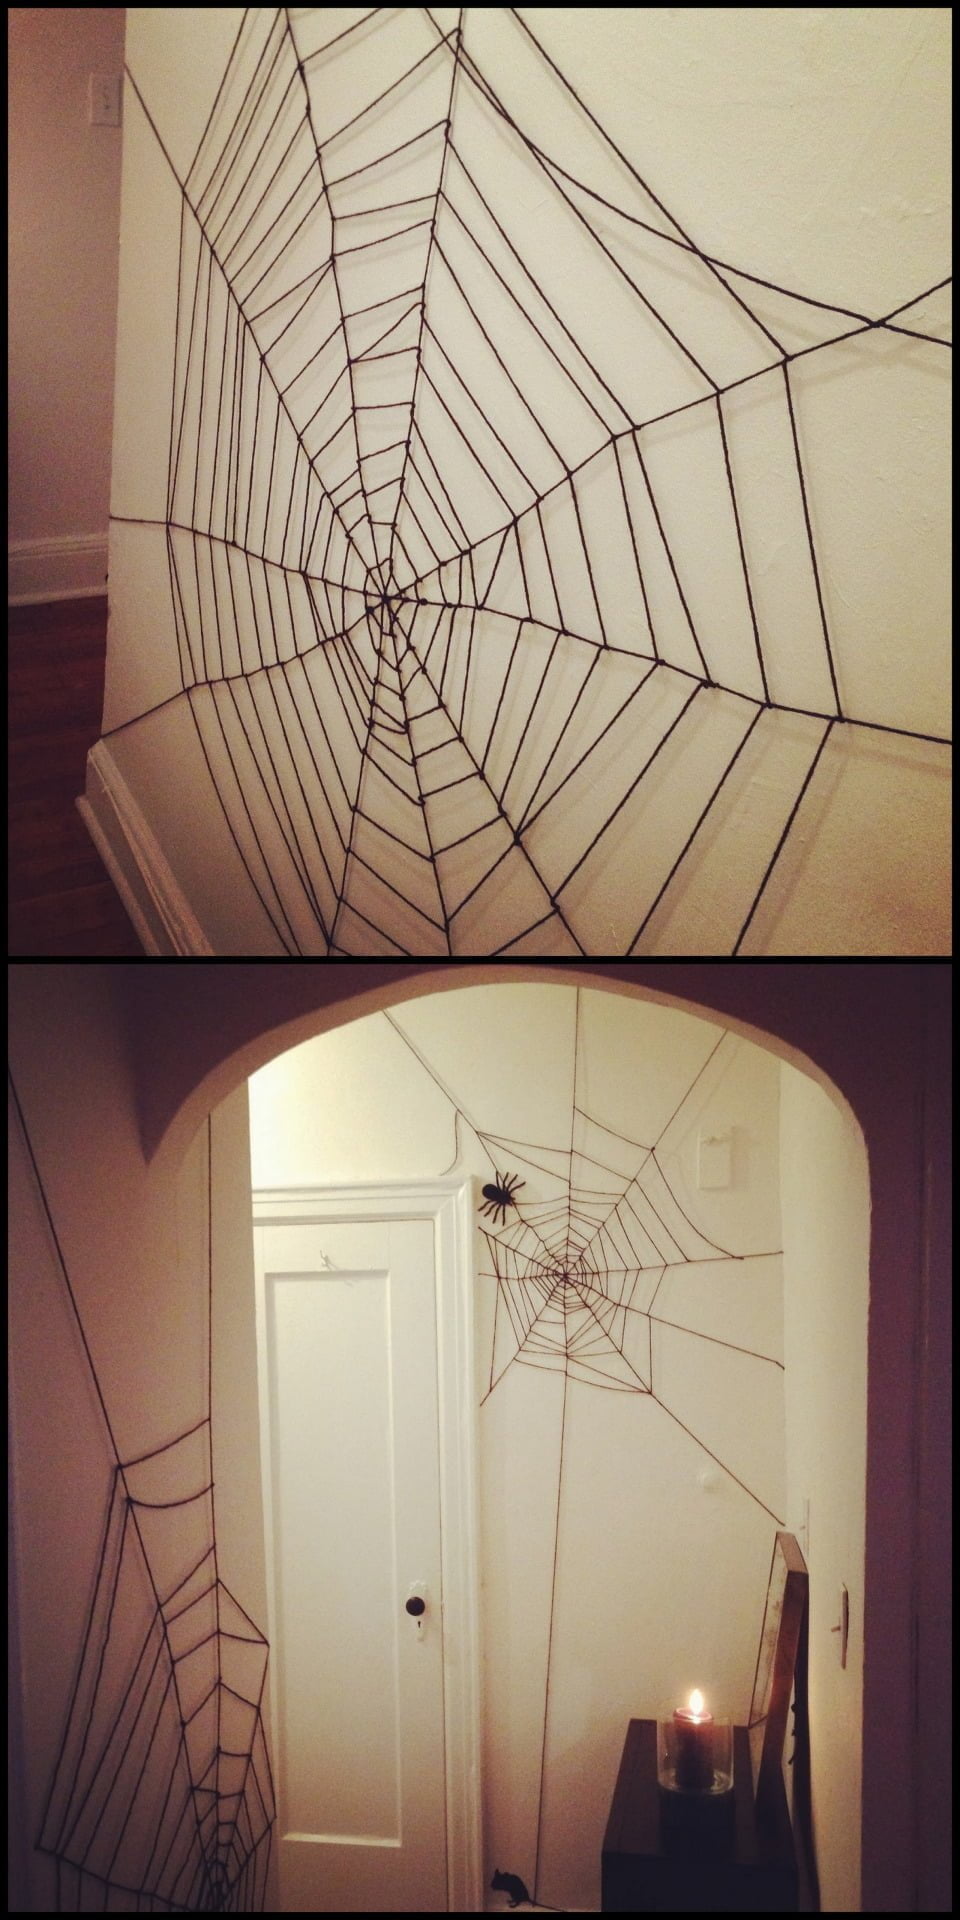 Yarn Spiderwebs Transform Rooms